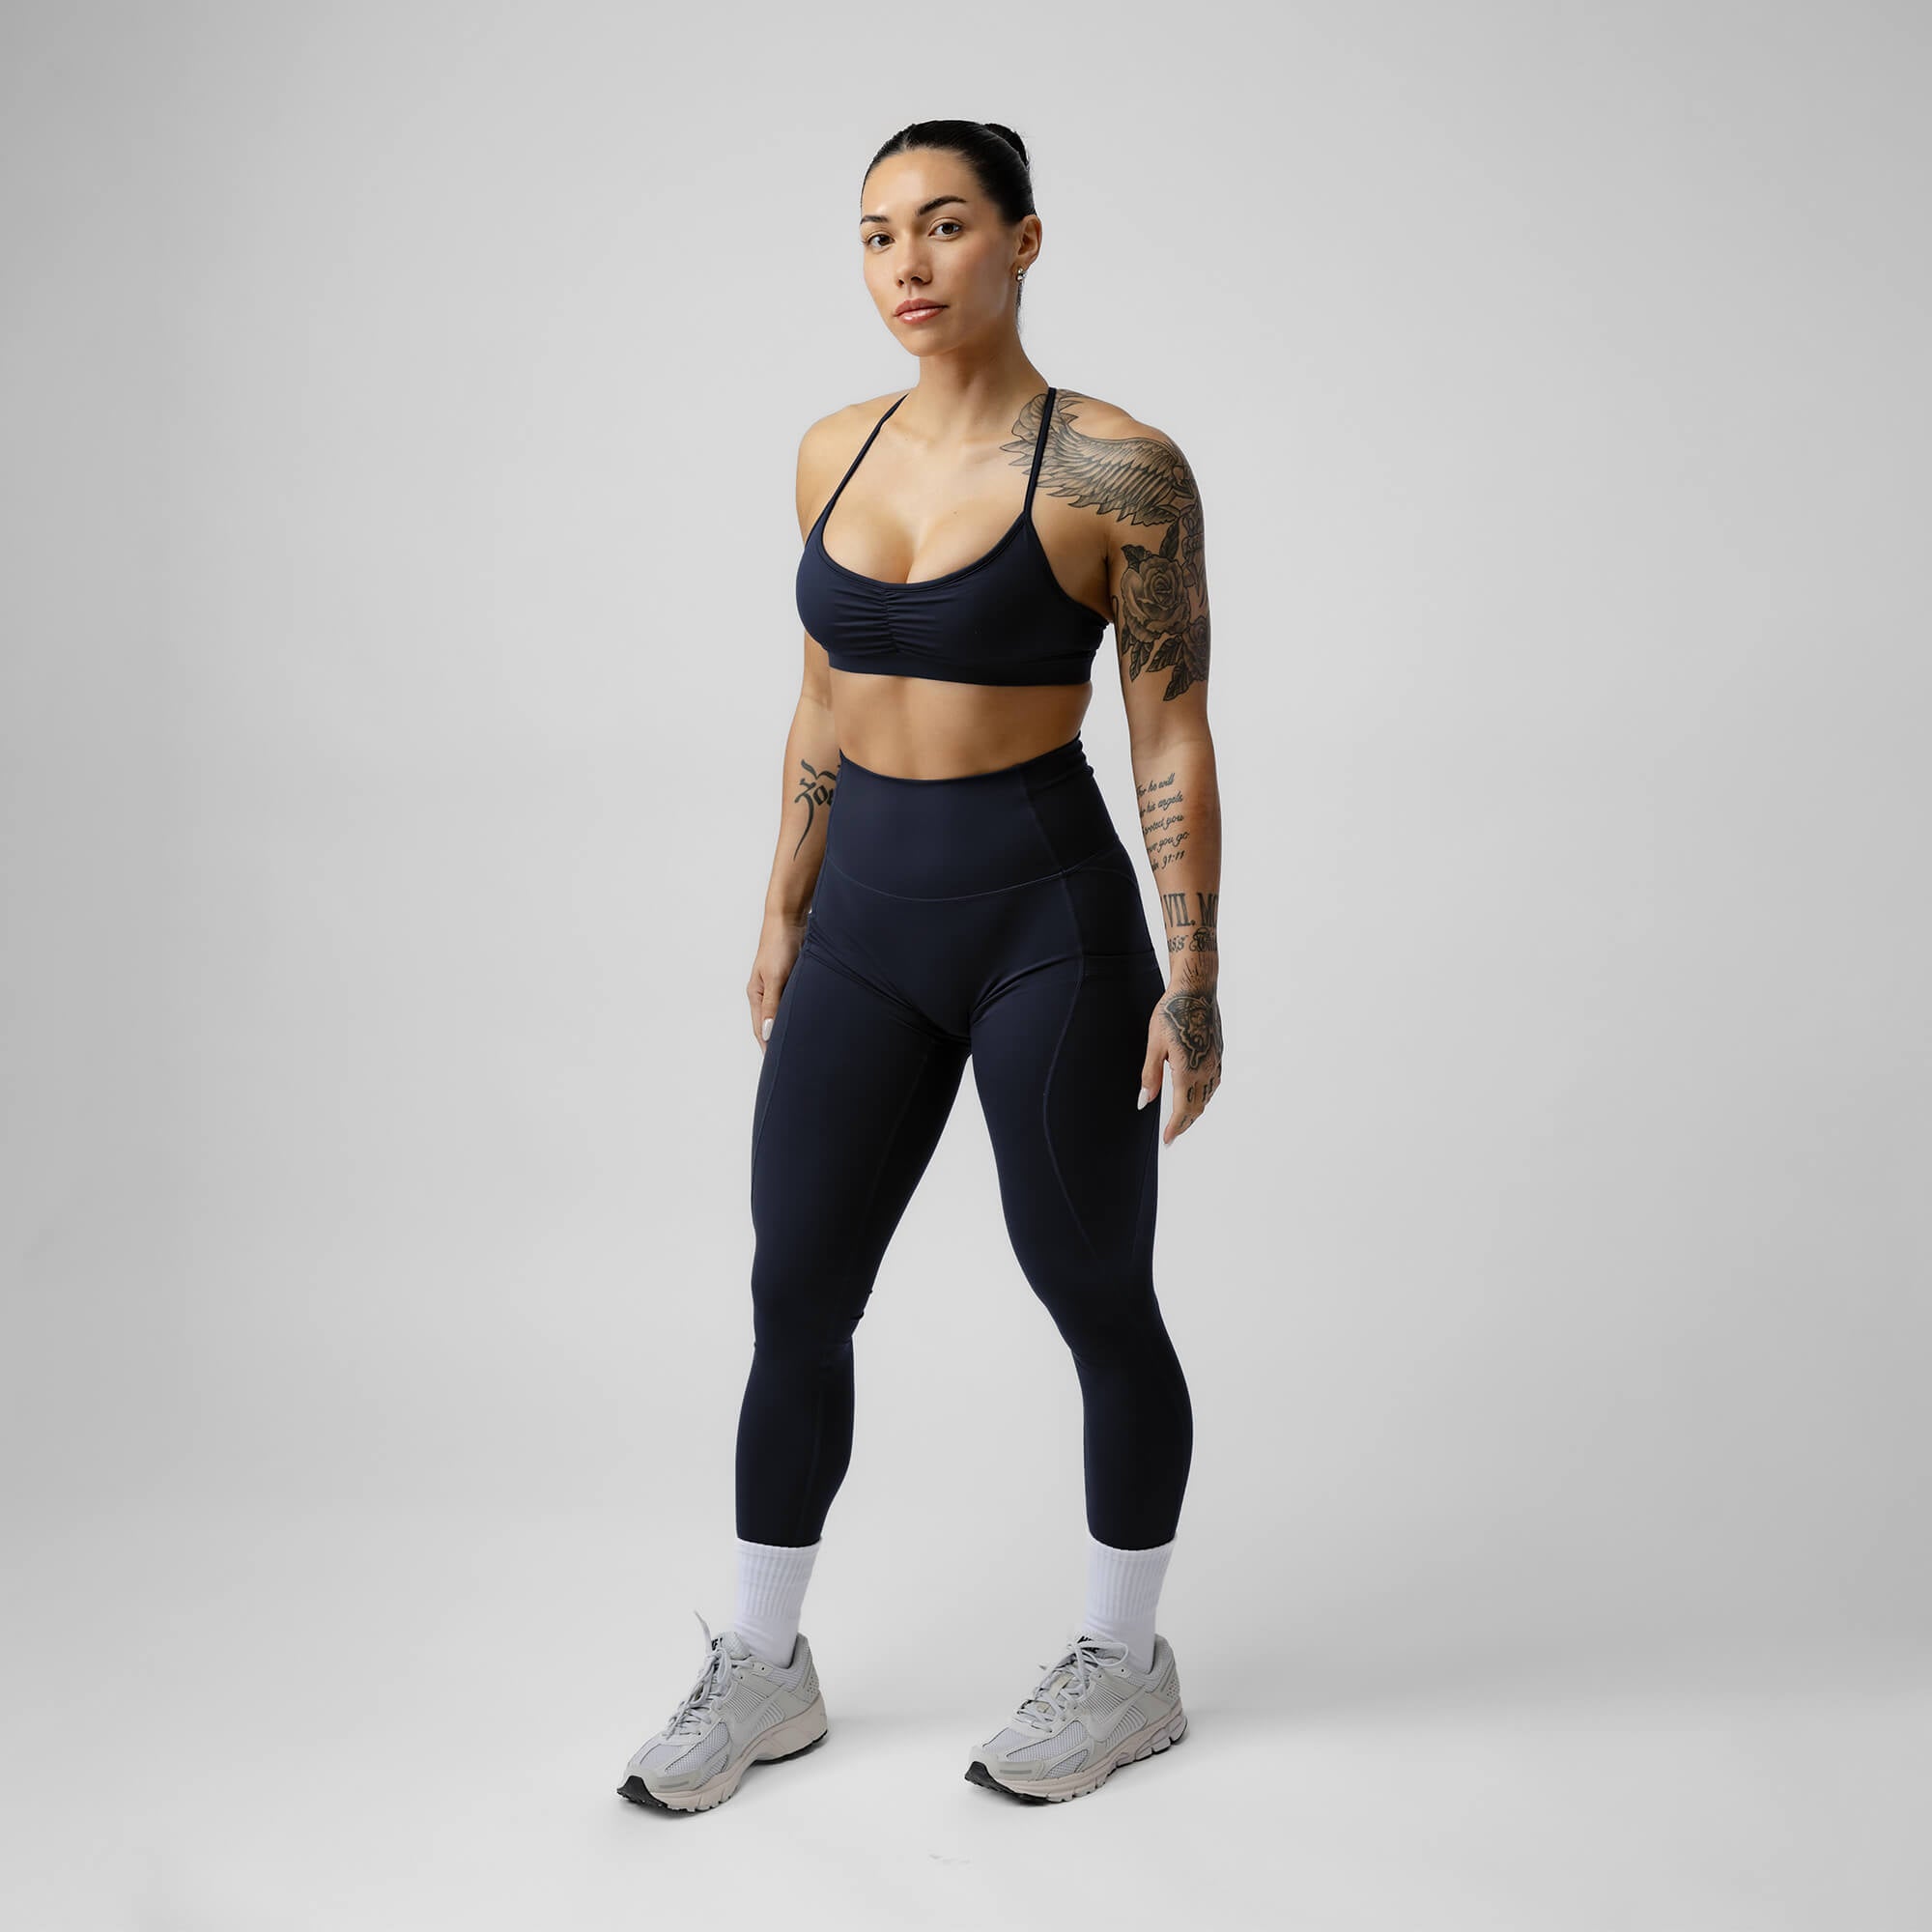 Physiclo Leggings Size Large Women Black Gray Pro Resistance Workout  Compression 